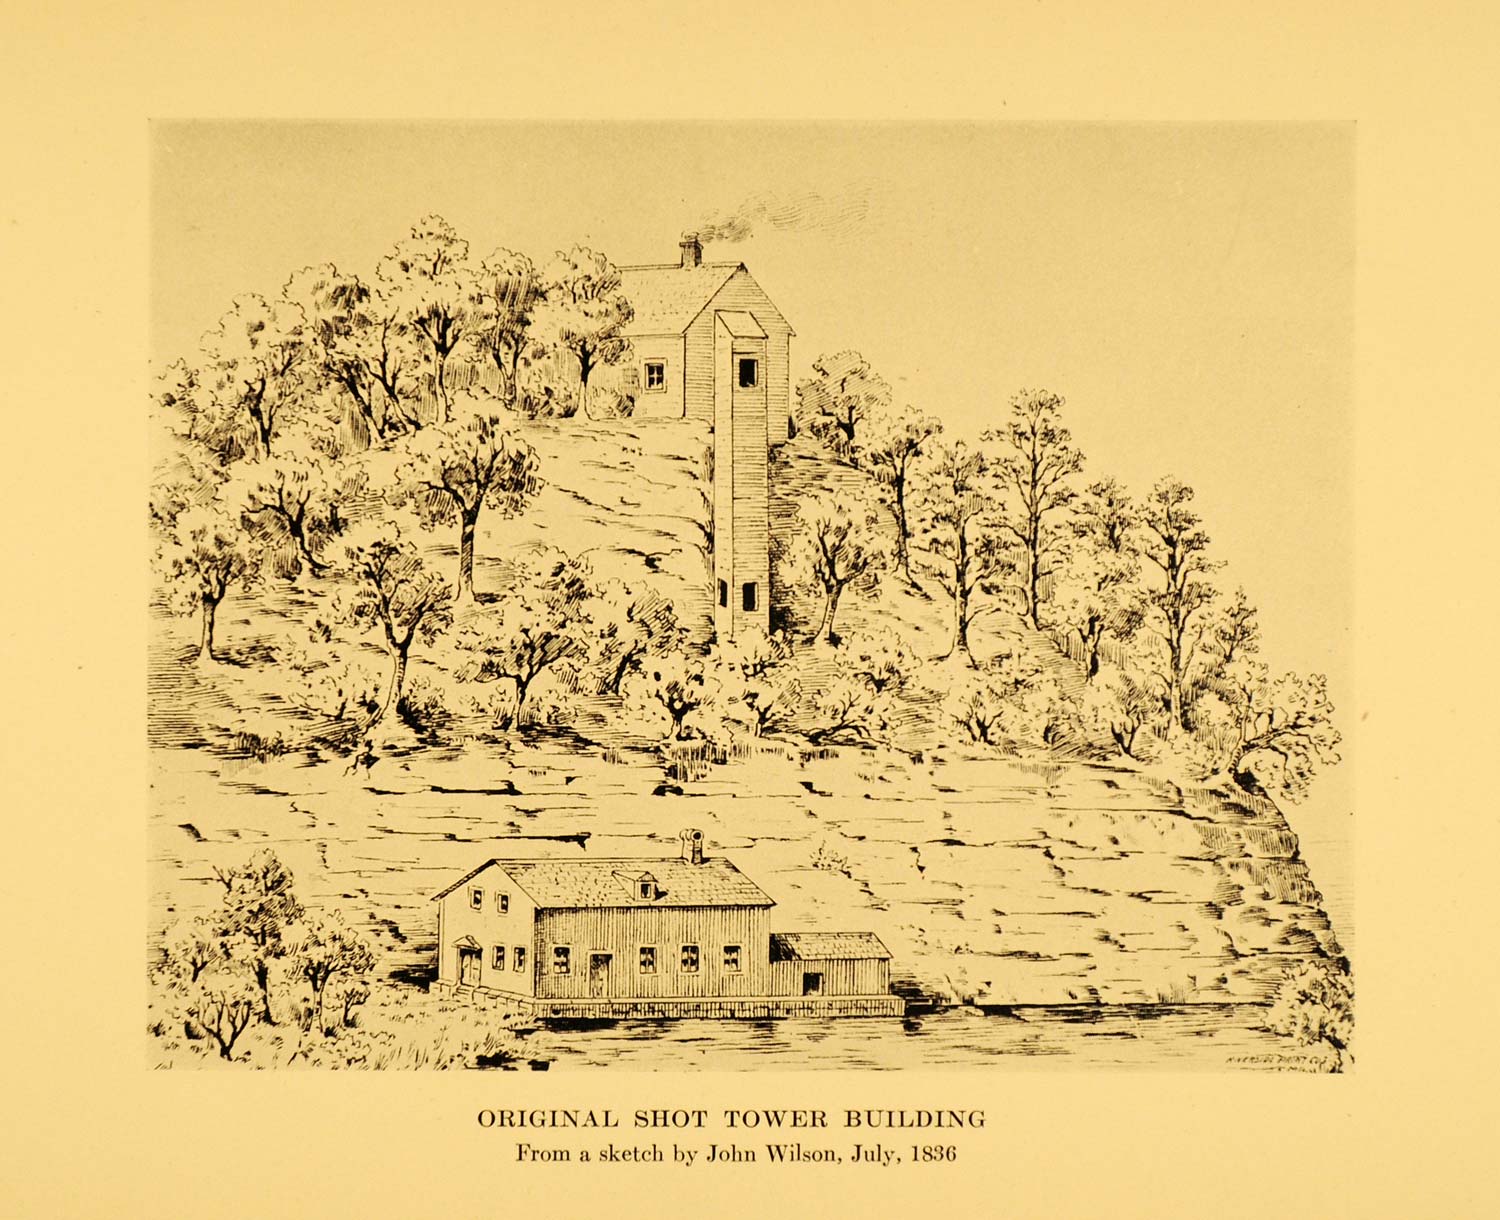 1924 Print Tower Building Sketch John Wilson 1836 July ORIGINAL HISTORIC WIS1